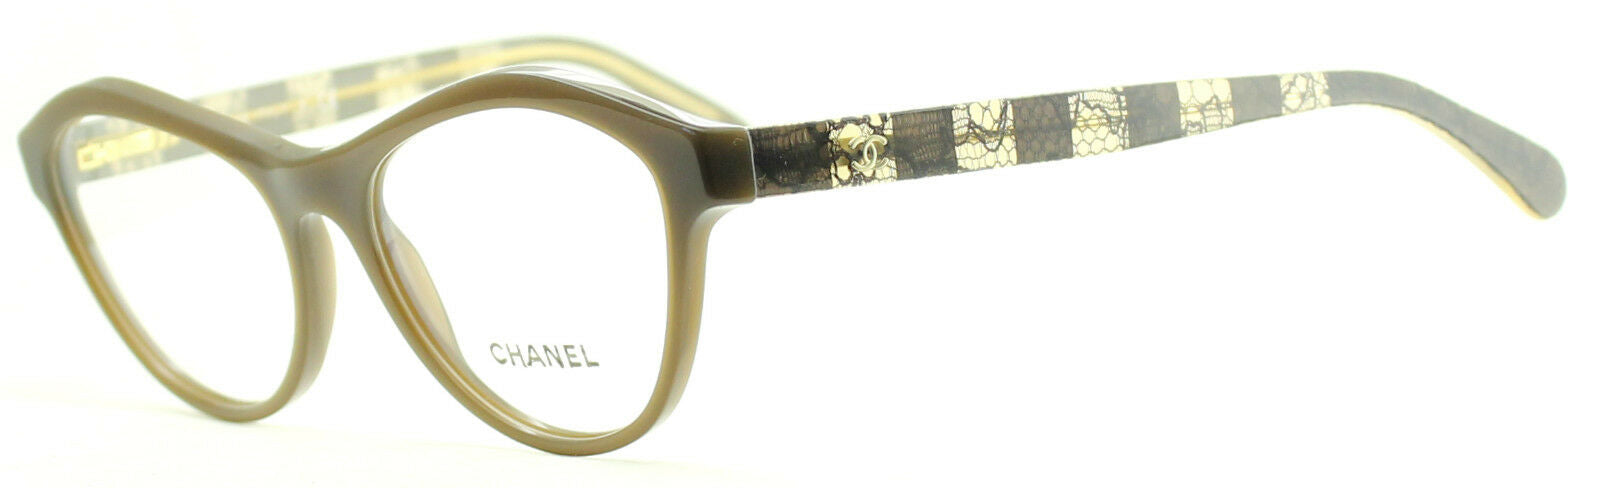 CHANEL 3384 c.1191 Eyewear 52mm FRAMES Eyeglasses RX Optical Glasses New -  Italy - GGV Eyewear